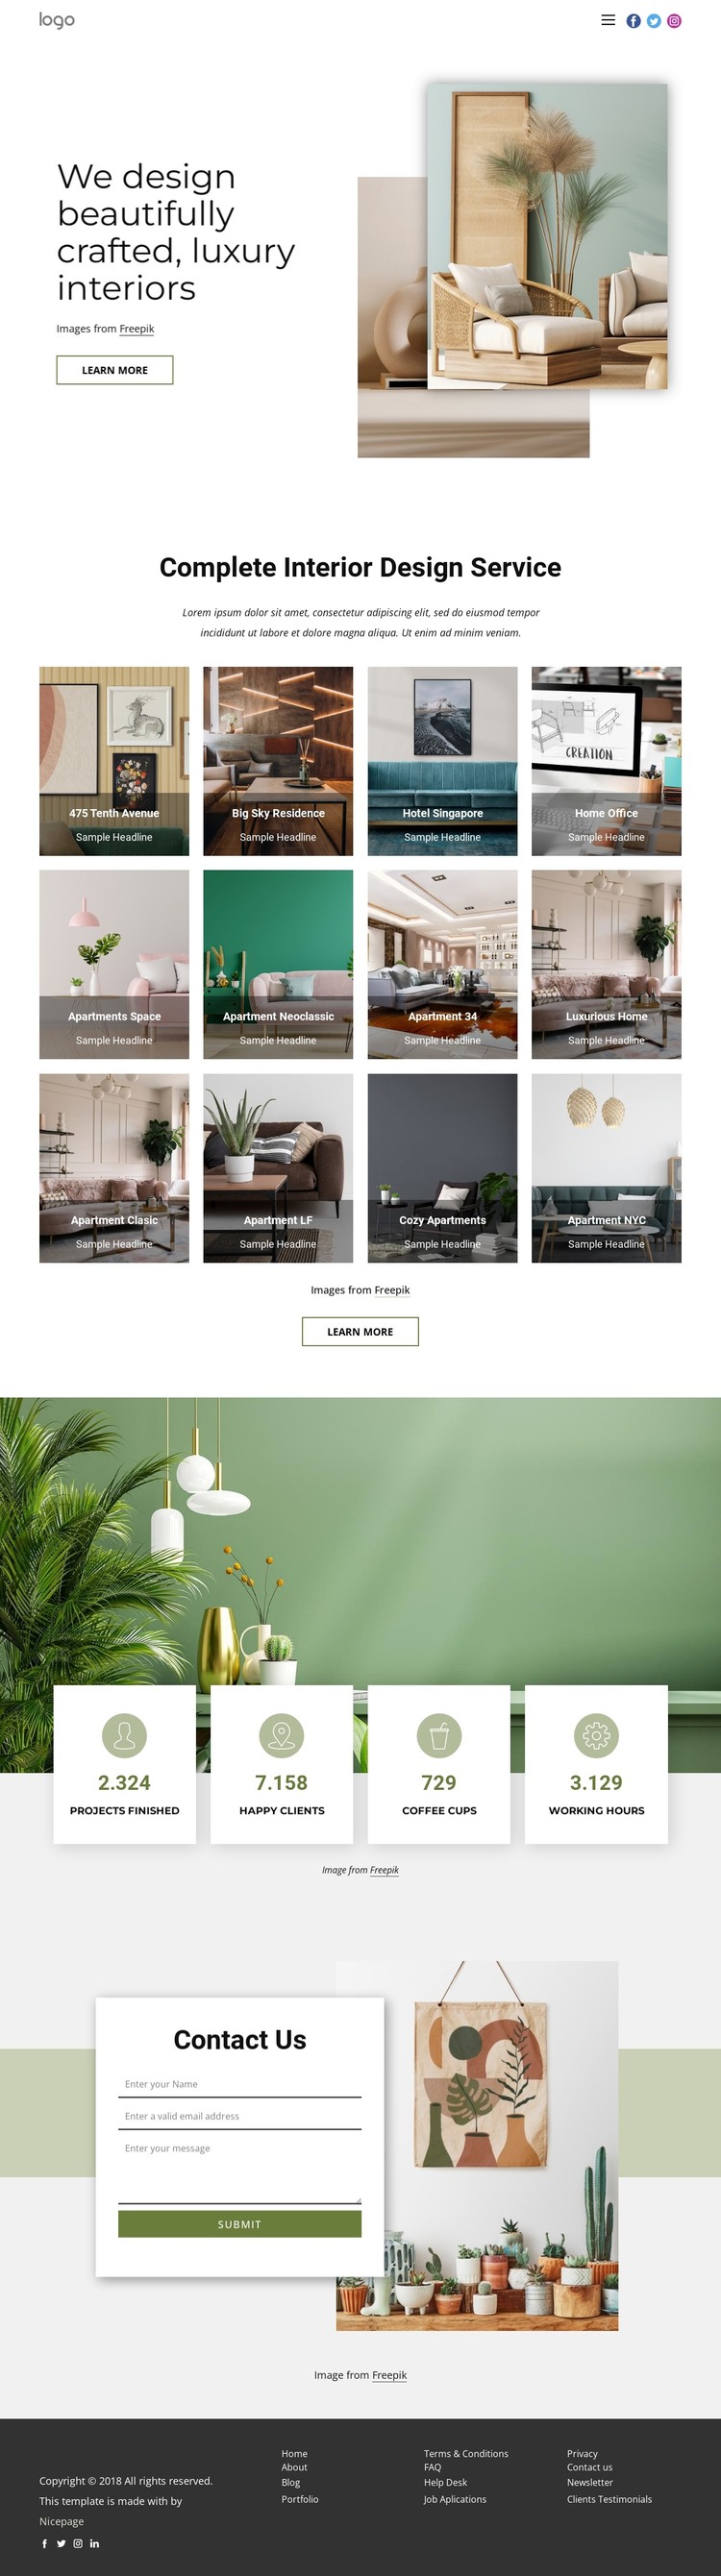 We design luxury interiors WordPress Theme